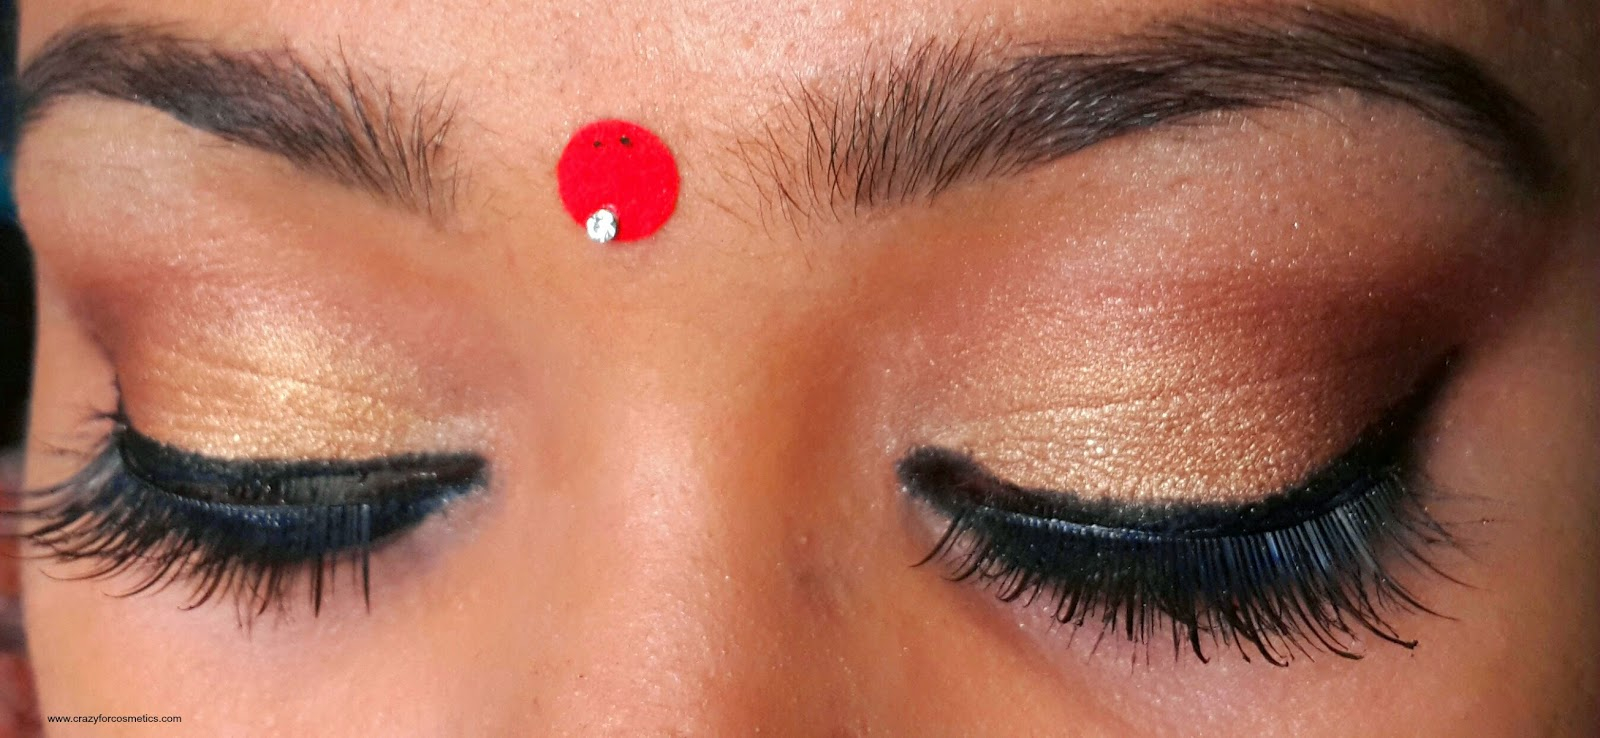 Bengali Eye Makeup Brides Of The World Inspired Eye Makeup Series Part 3 Indian